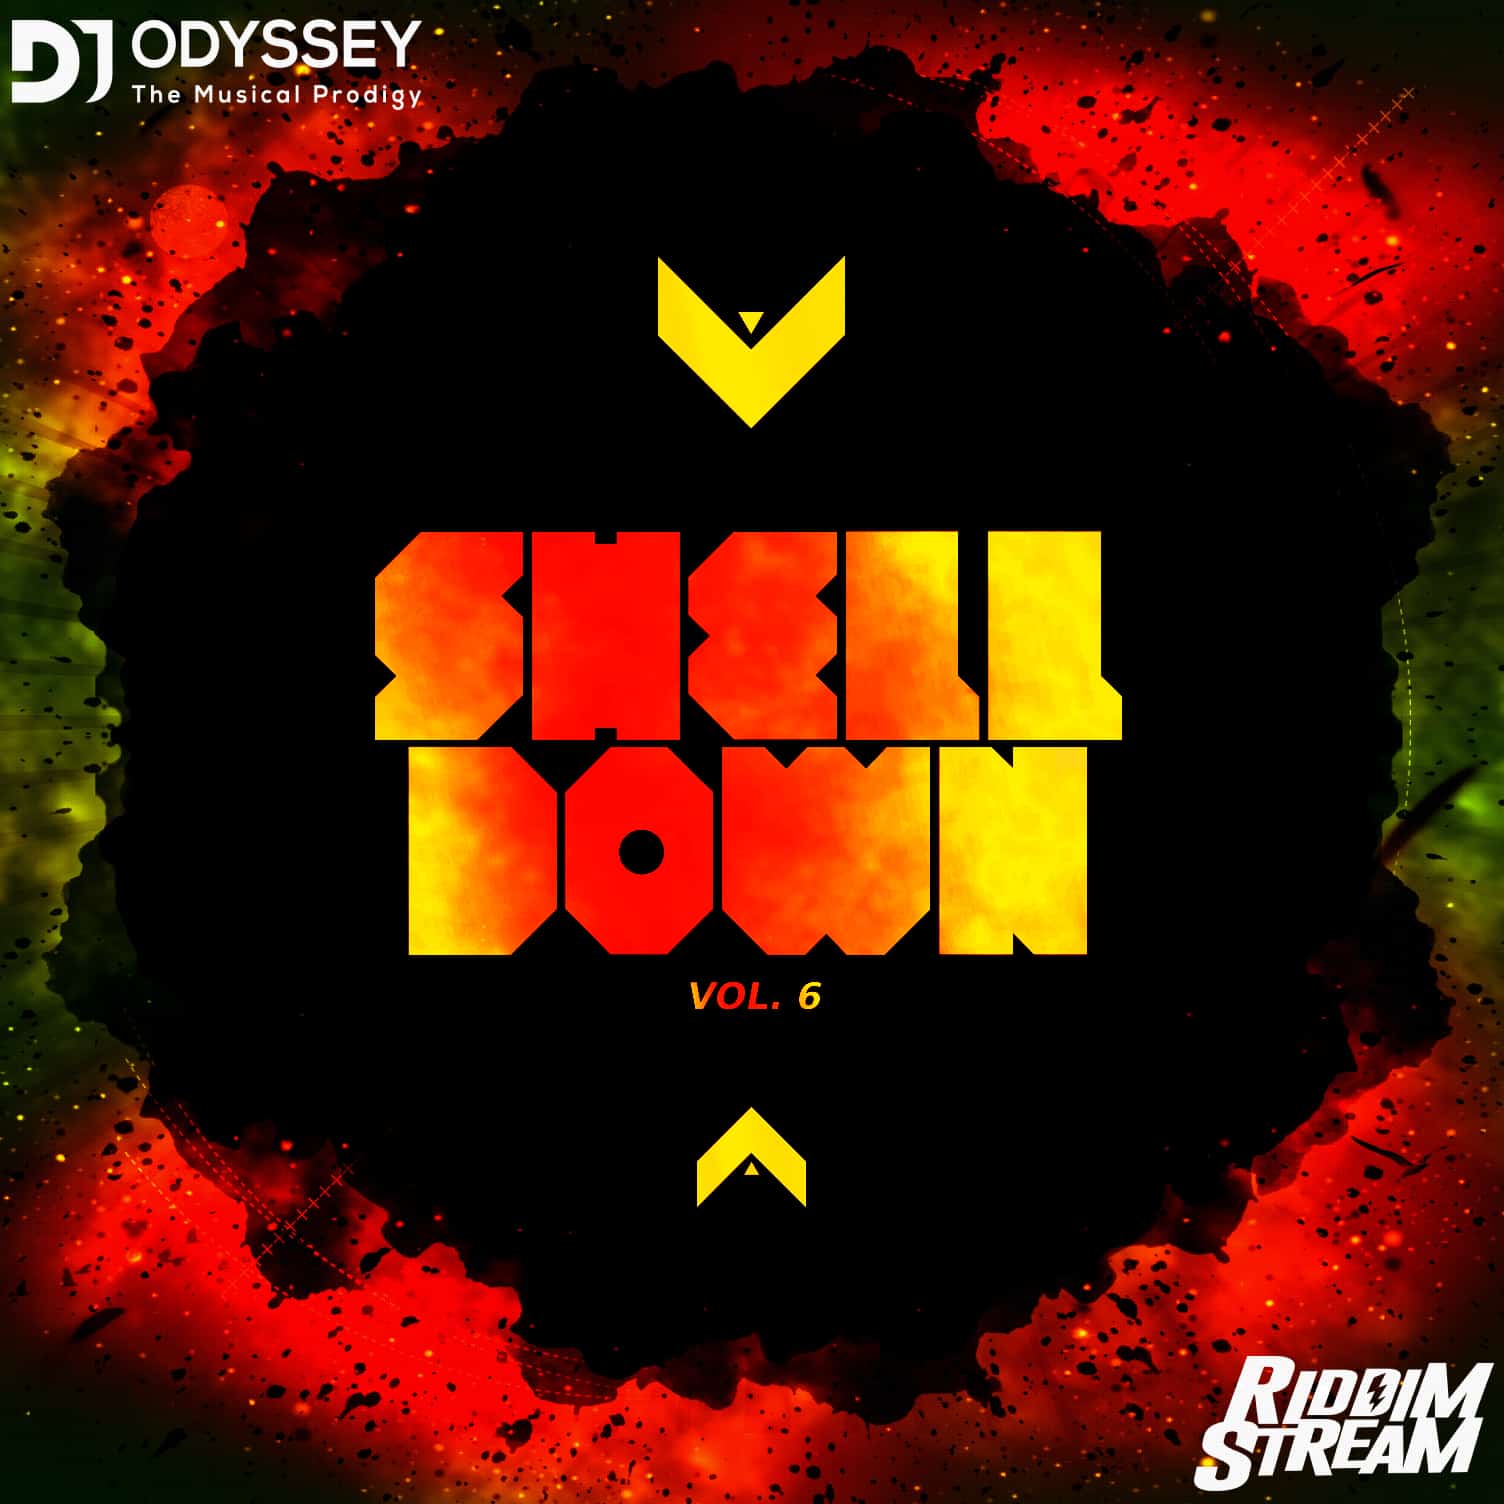 Dj Odyssey - Shell Down Vol 6 Mixtape